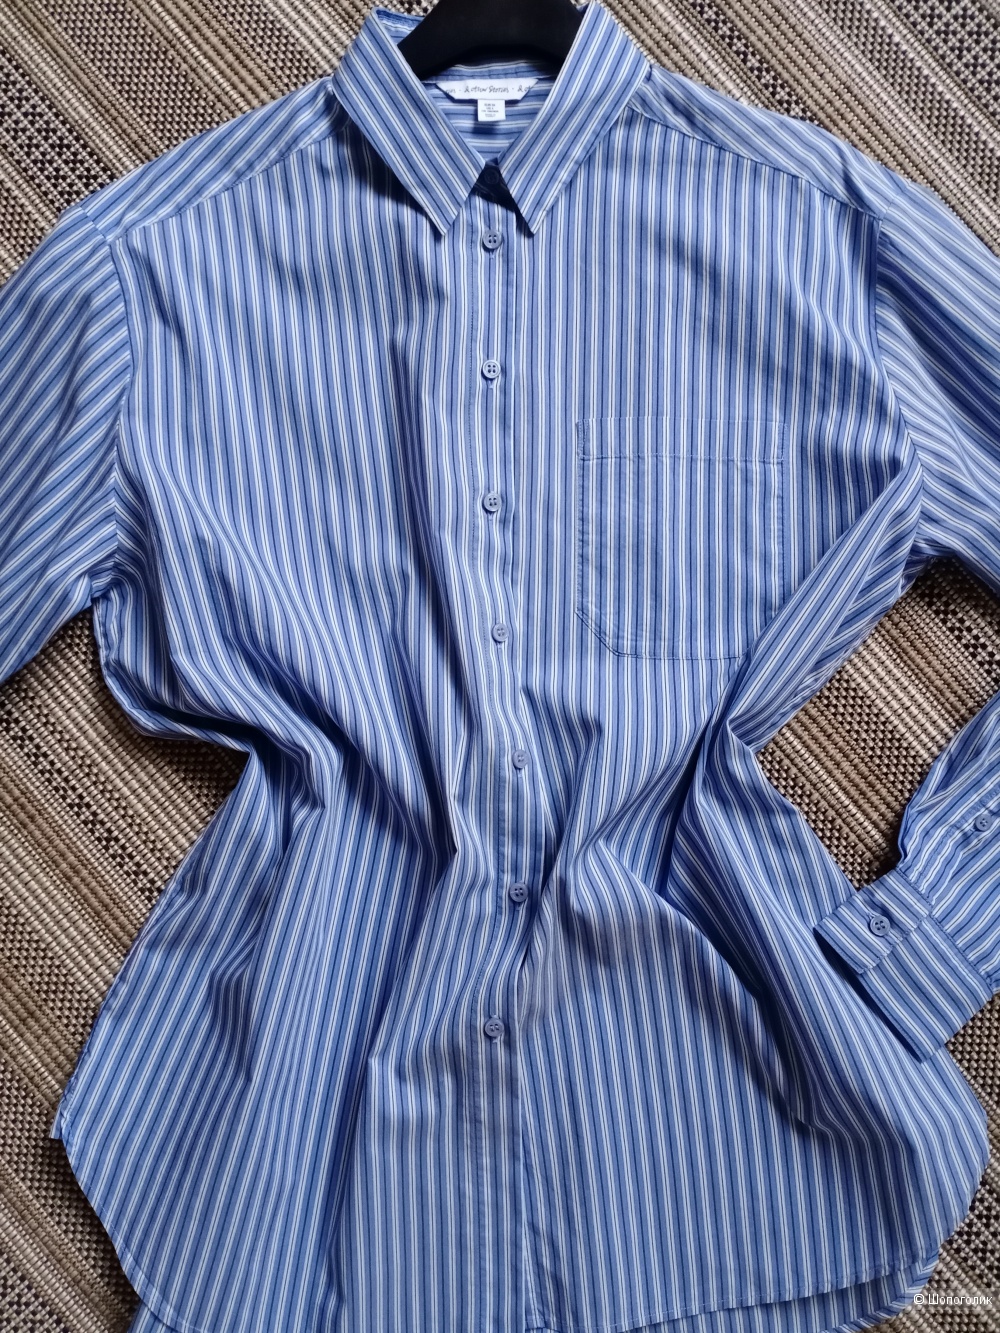 Блуза, рубашка & Other Stories, 44-48